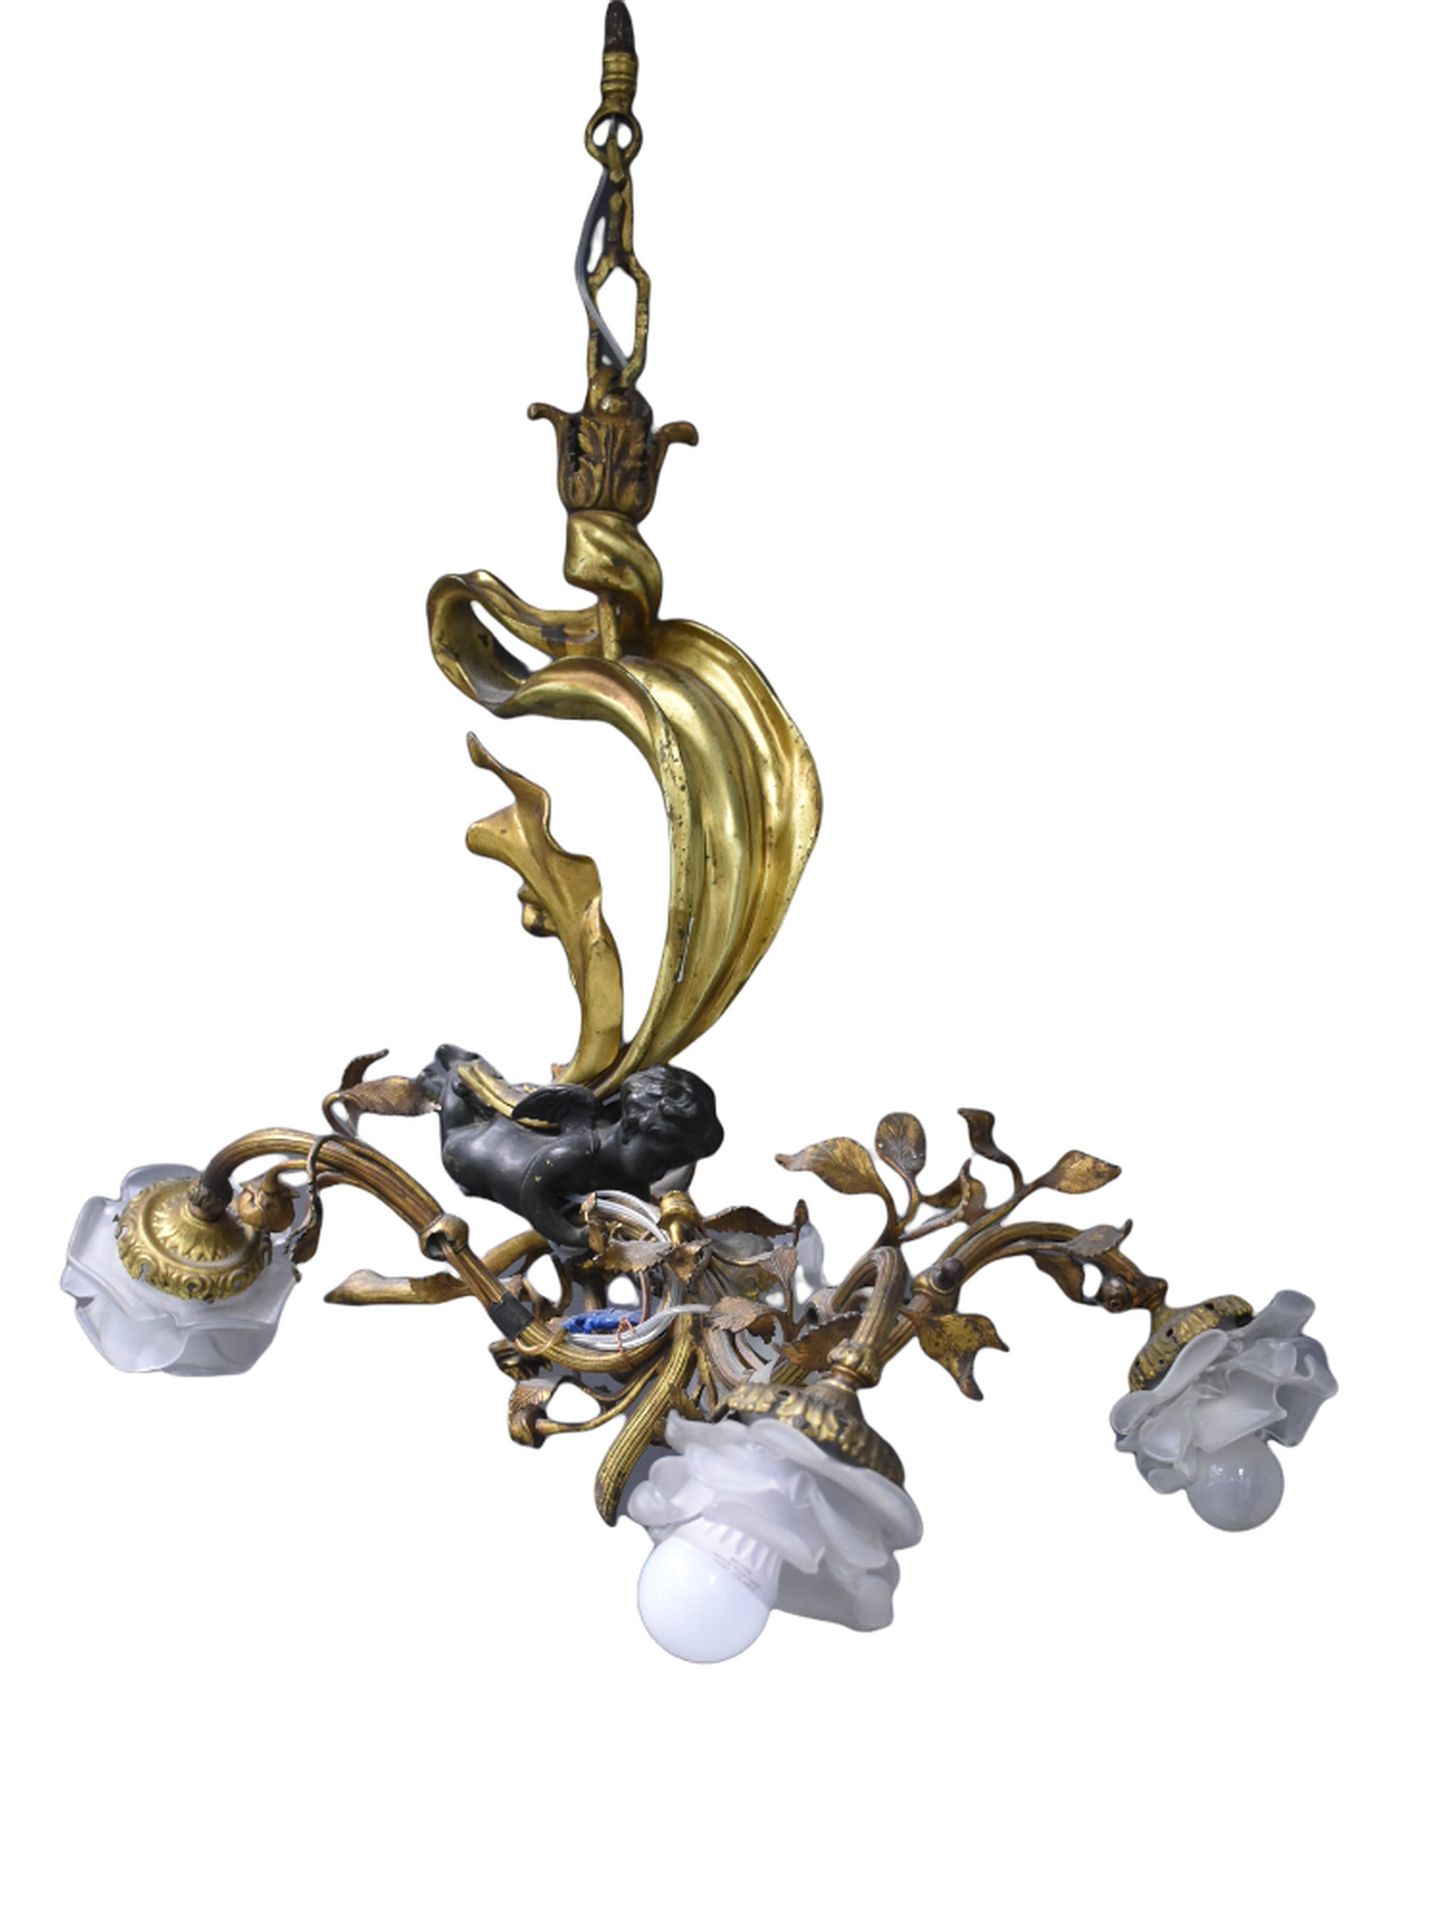 Null 鎏金铜和铜化的吊灯，有一个小天使拿着四个光臂。高度：55厘米，包括链条在内为78厘米。翼展：55厘米。 

北欧：青铜器上有一个小天使的图案，上面有四&hellip;